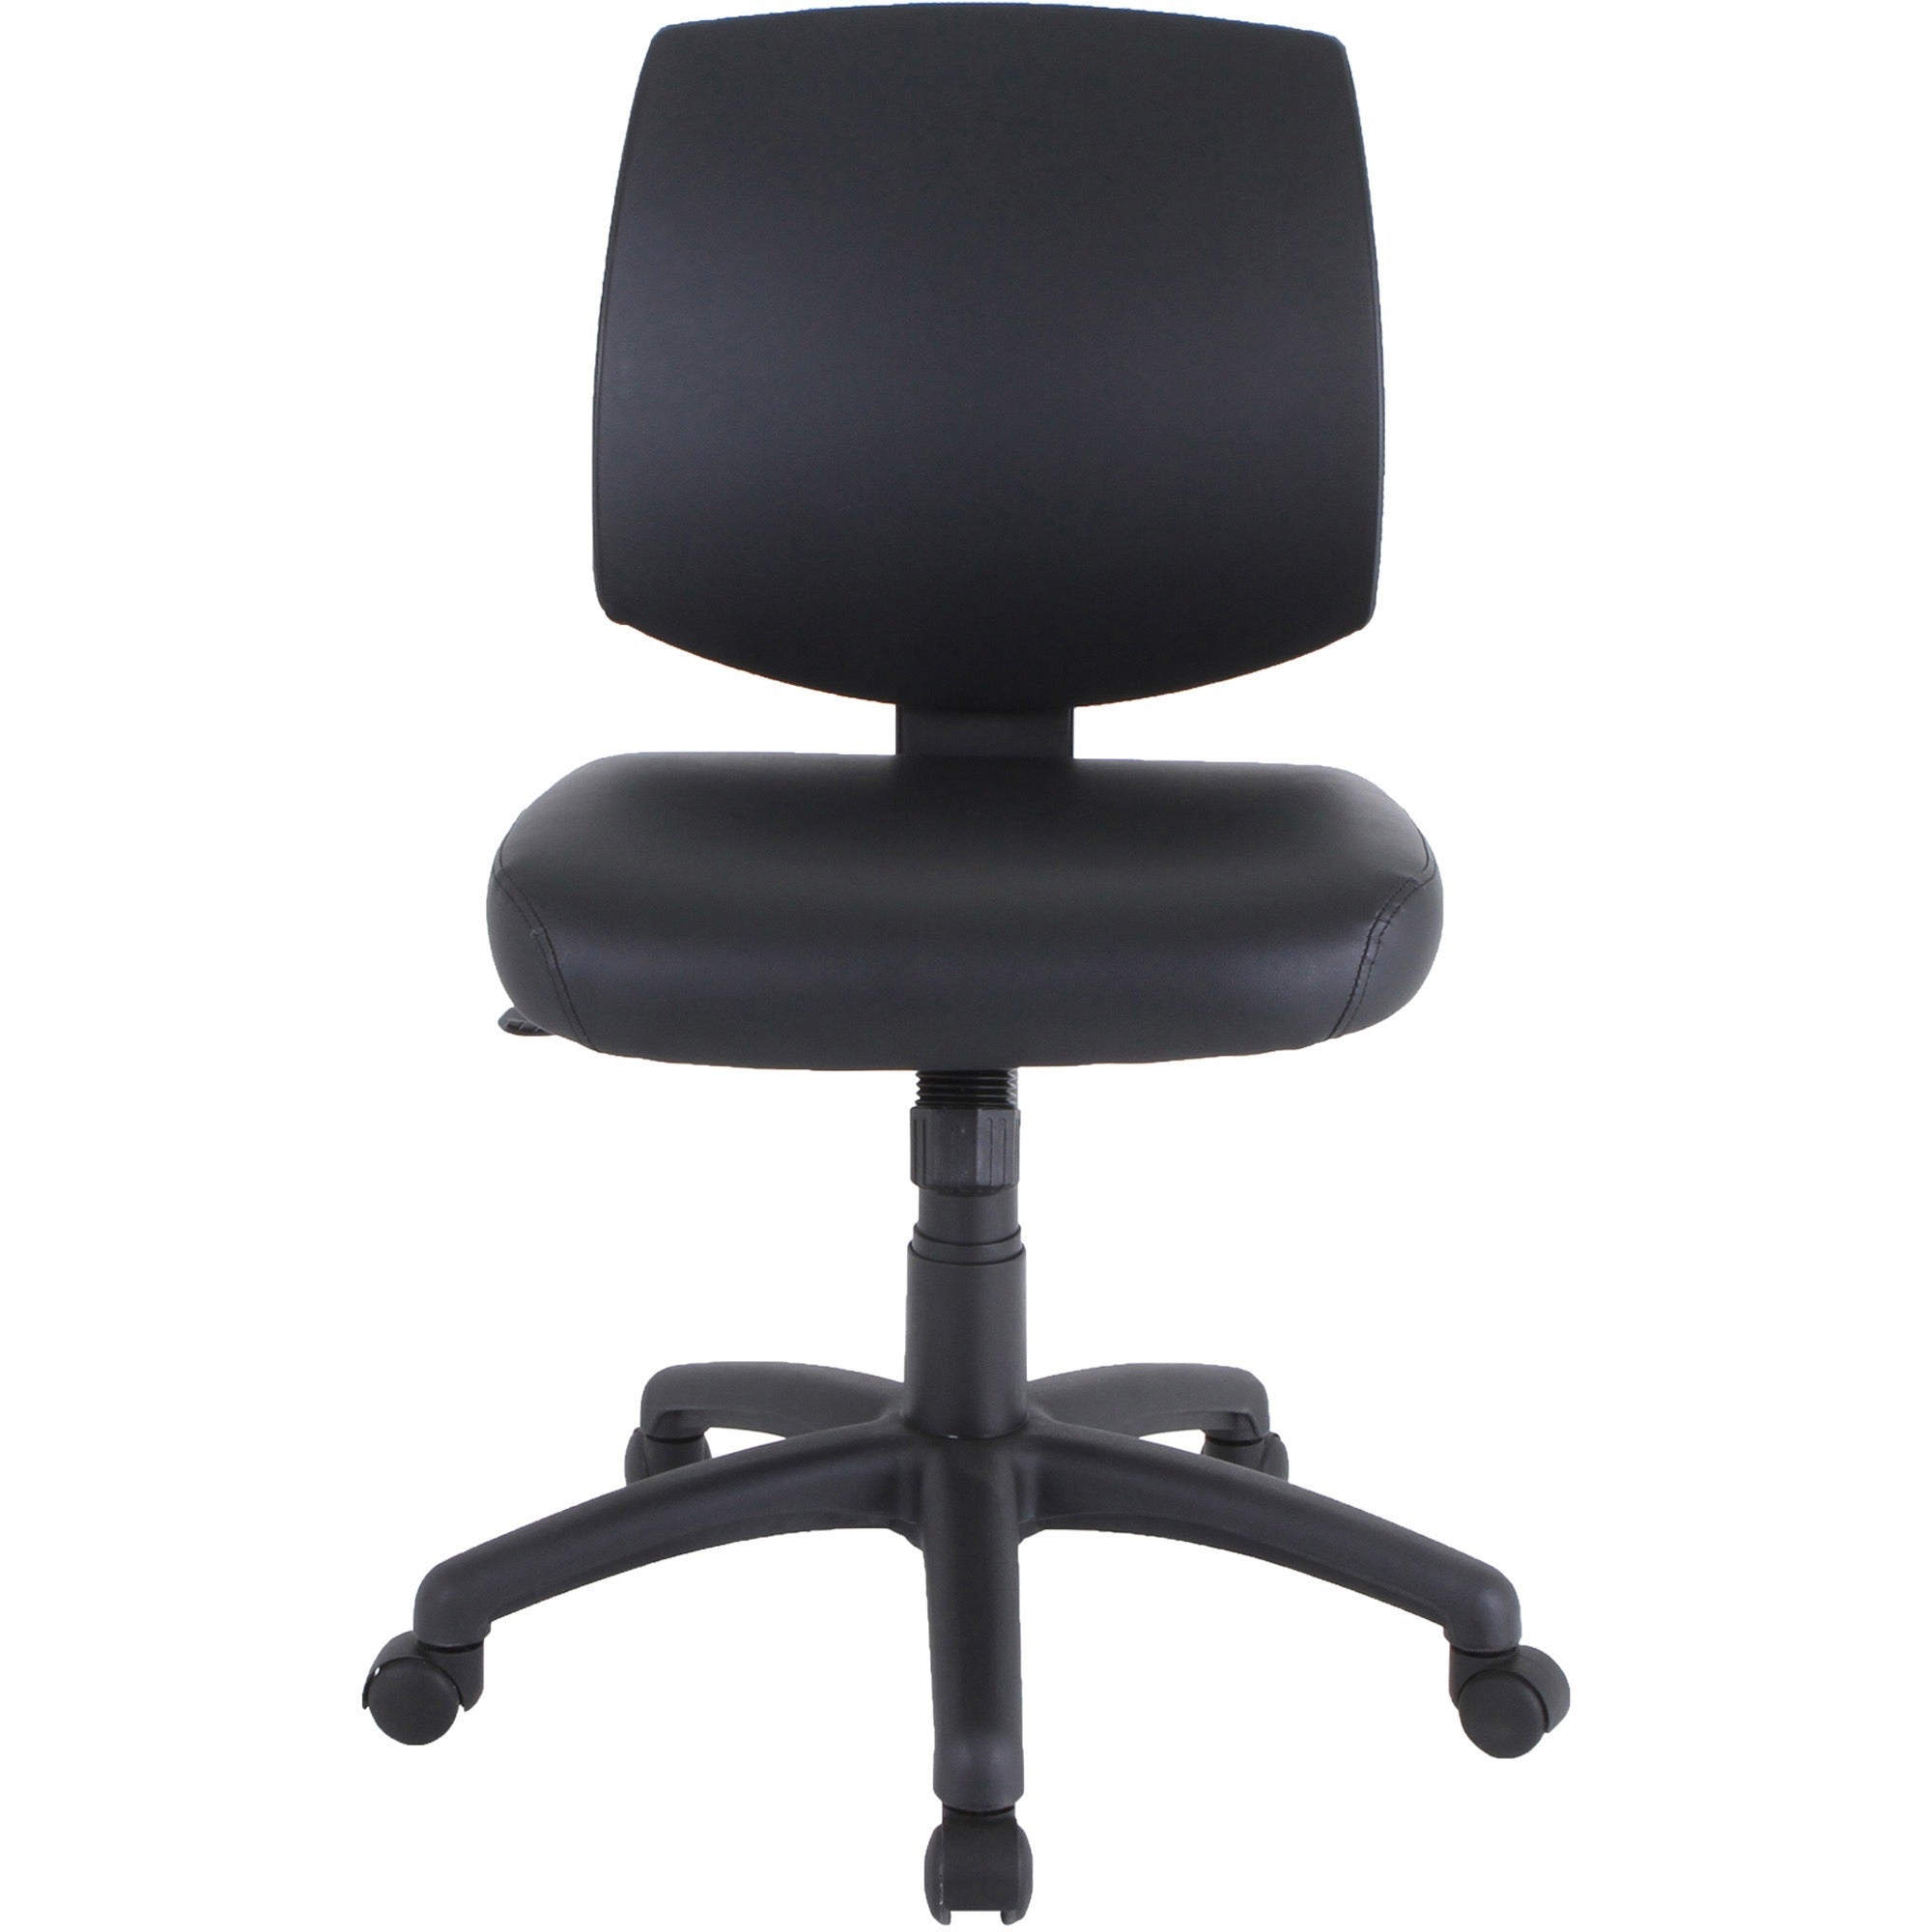 lorell-task-chair-polyvinyl-chloride-pvc-seat-polyvinyl-chloride-pvc-back-5-star-base-black-1-each_llr84877 - 3